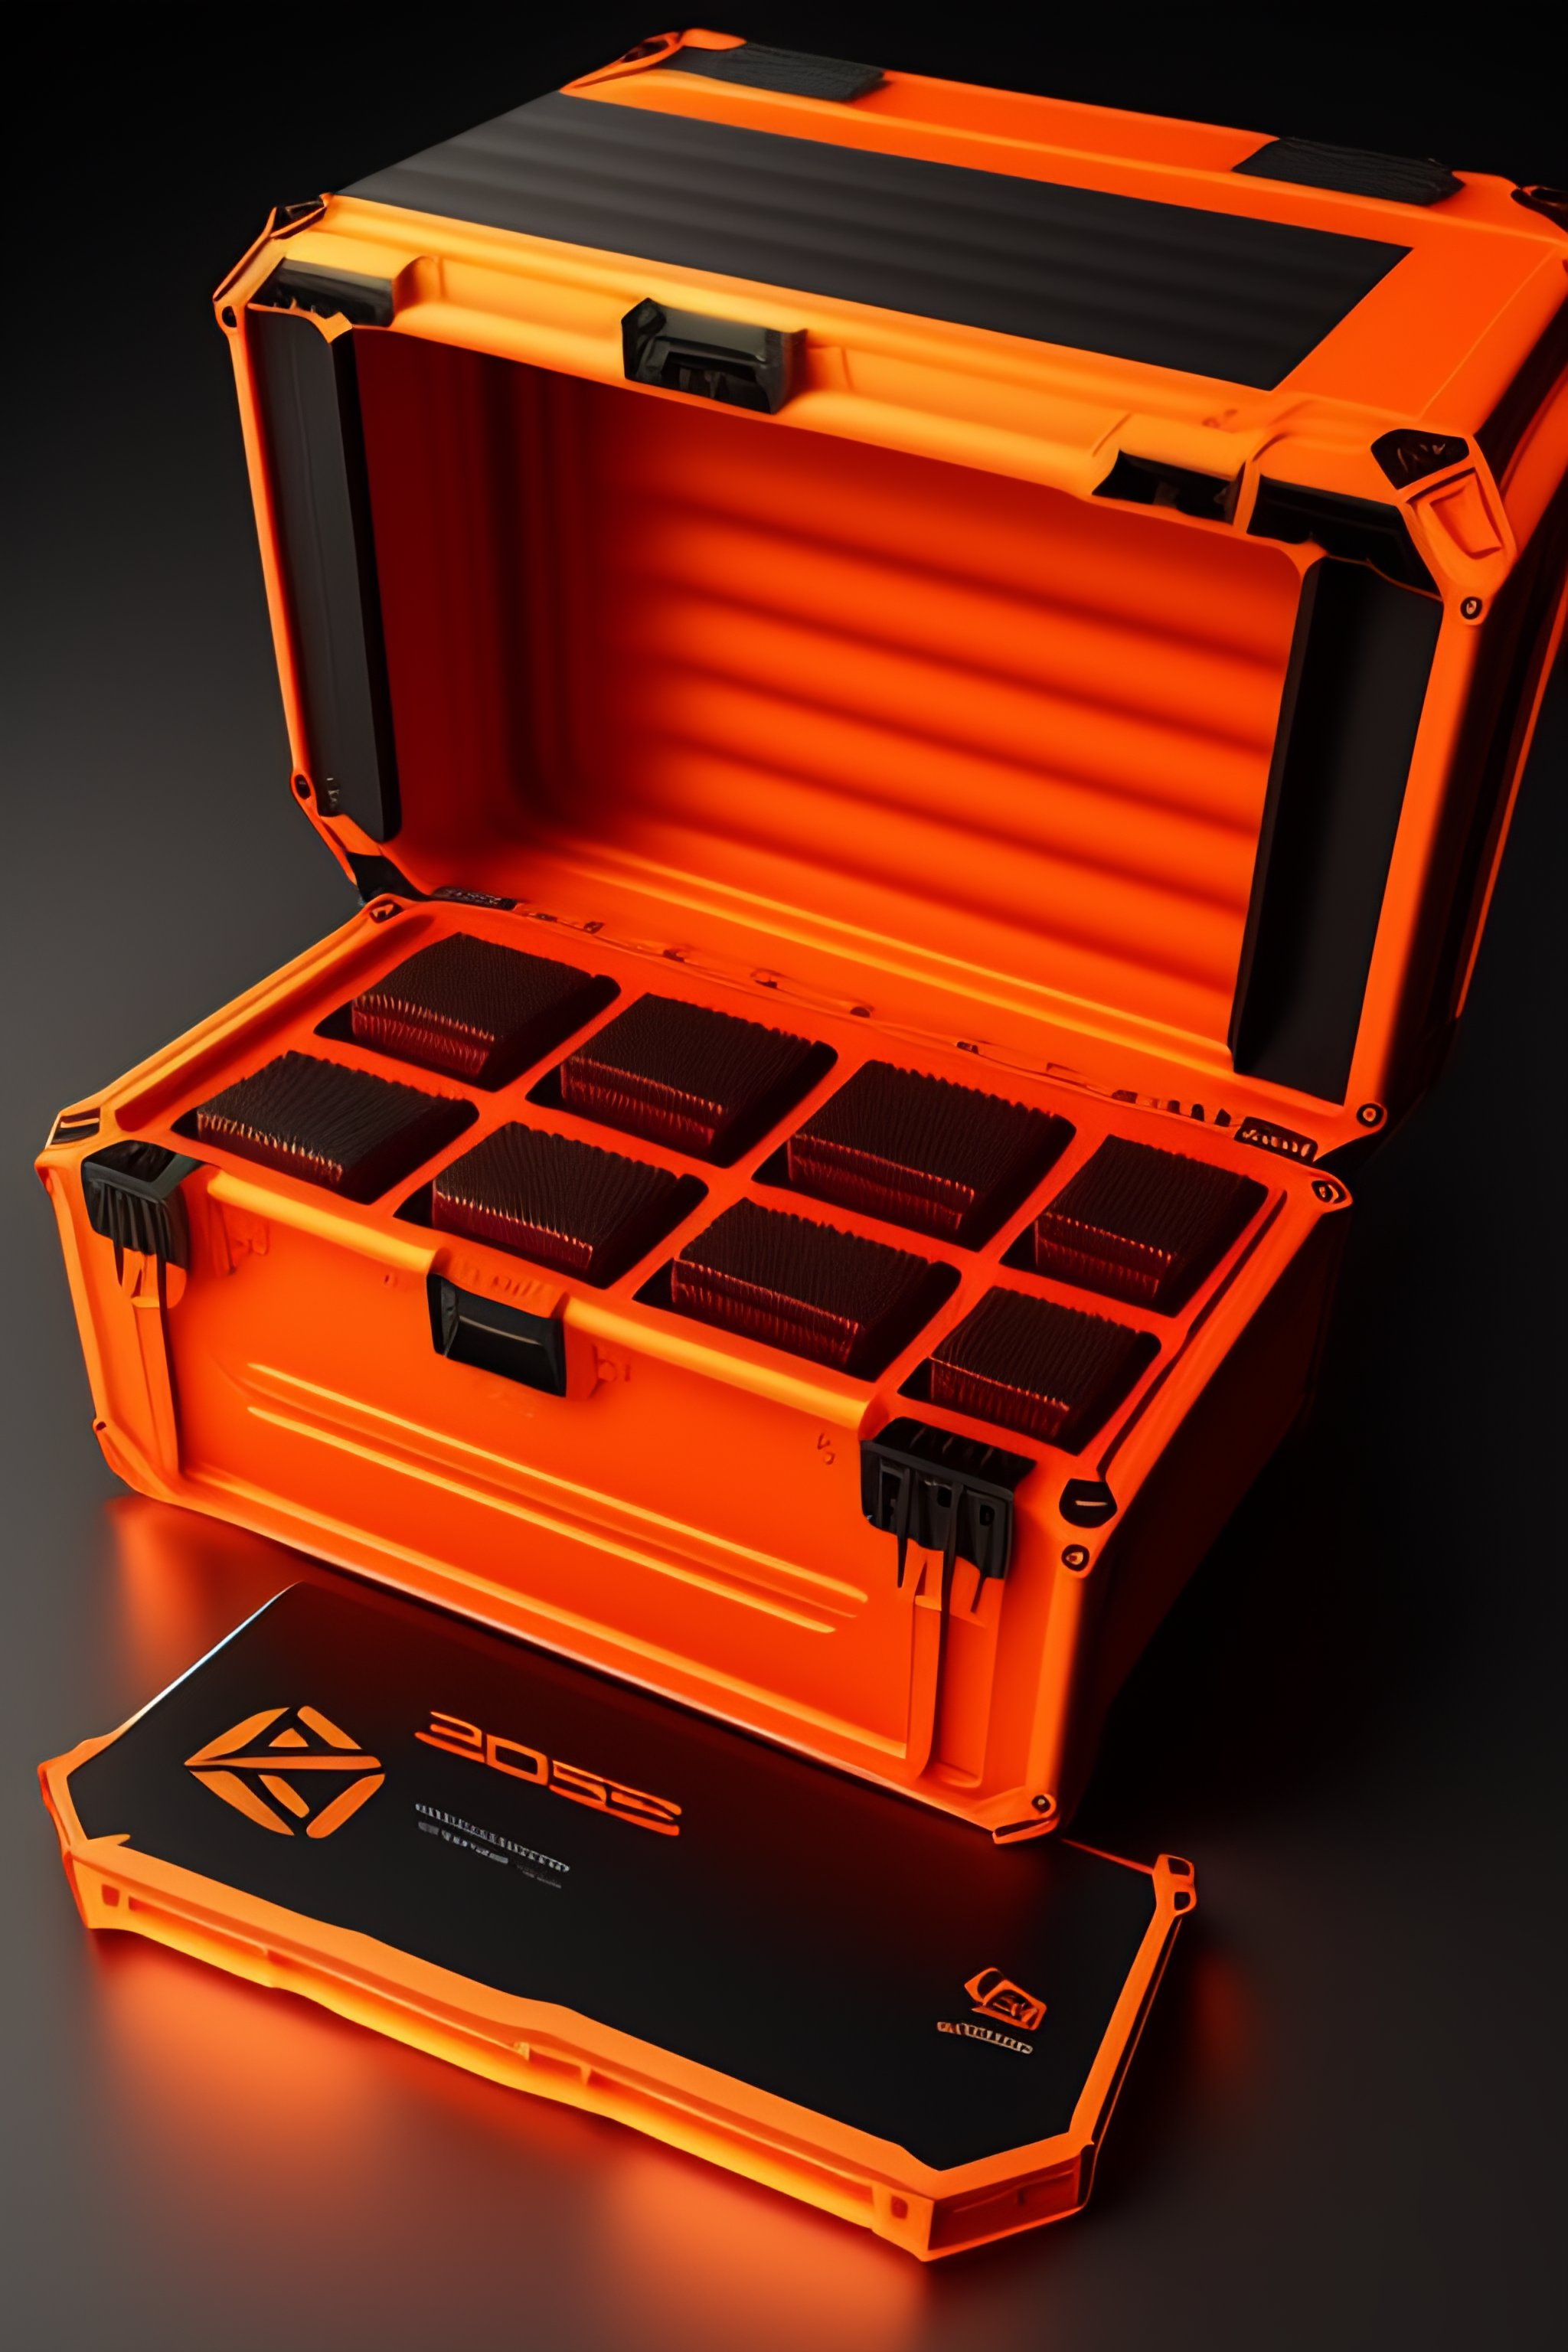 Lexica - CS-GO box case skin collection, hollographic orange details color, Knolling  layout, Highly detailed, Depth, Lumen render, 8k